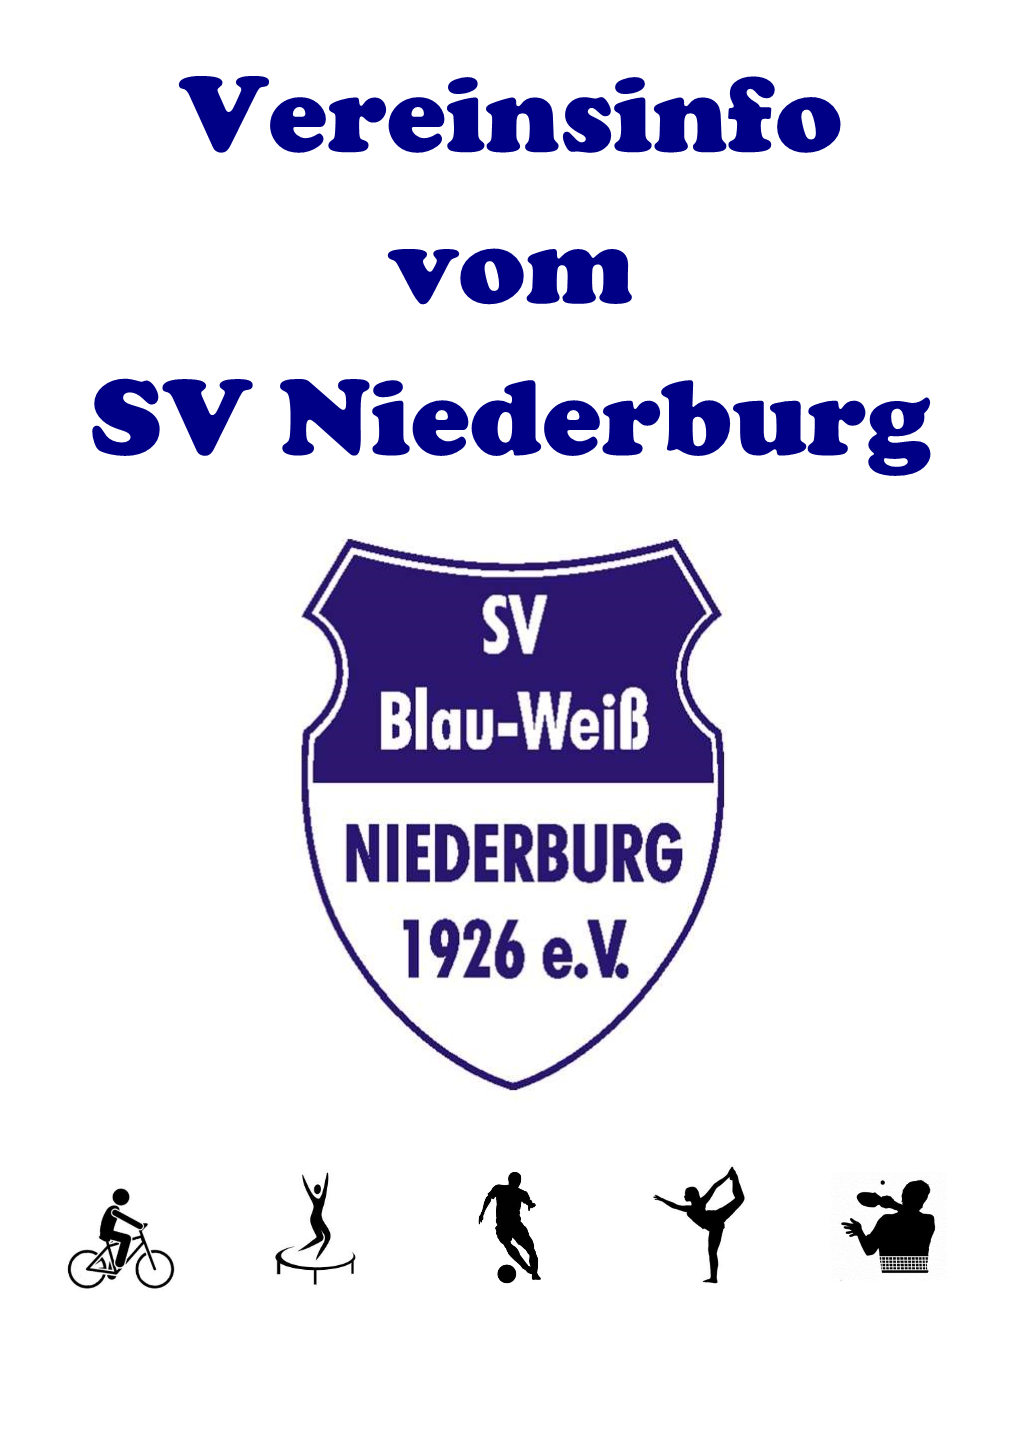 Vereinsinfo Vom SV Niederburg